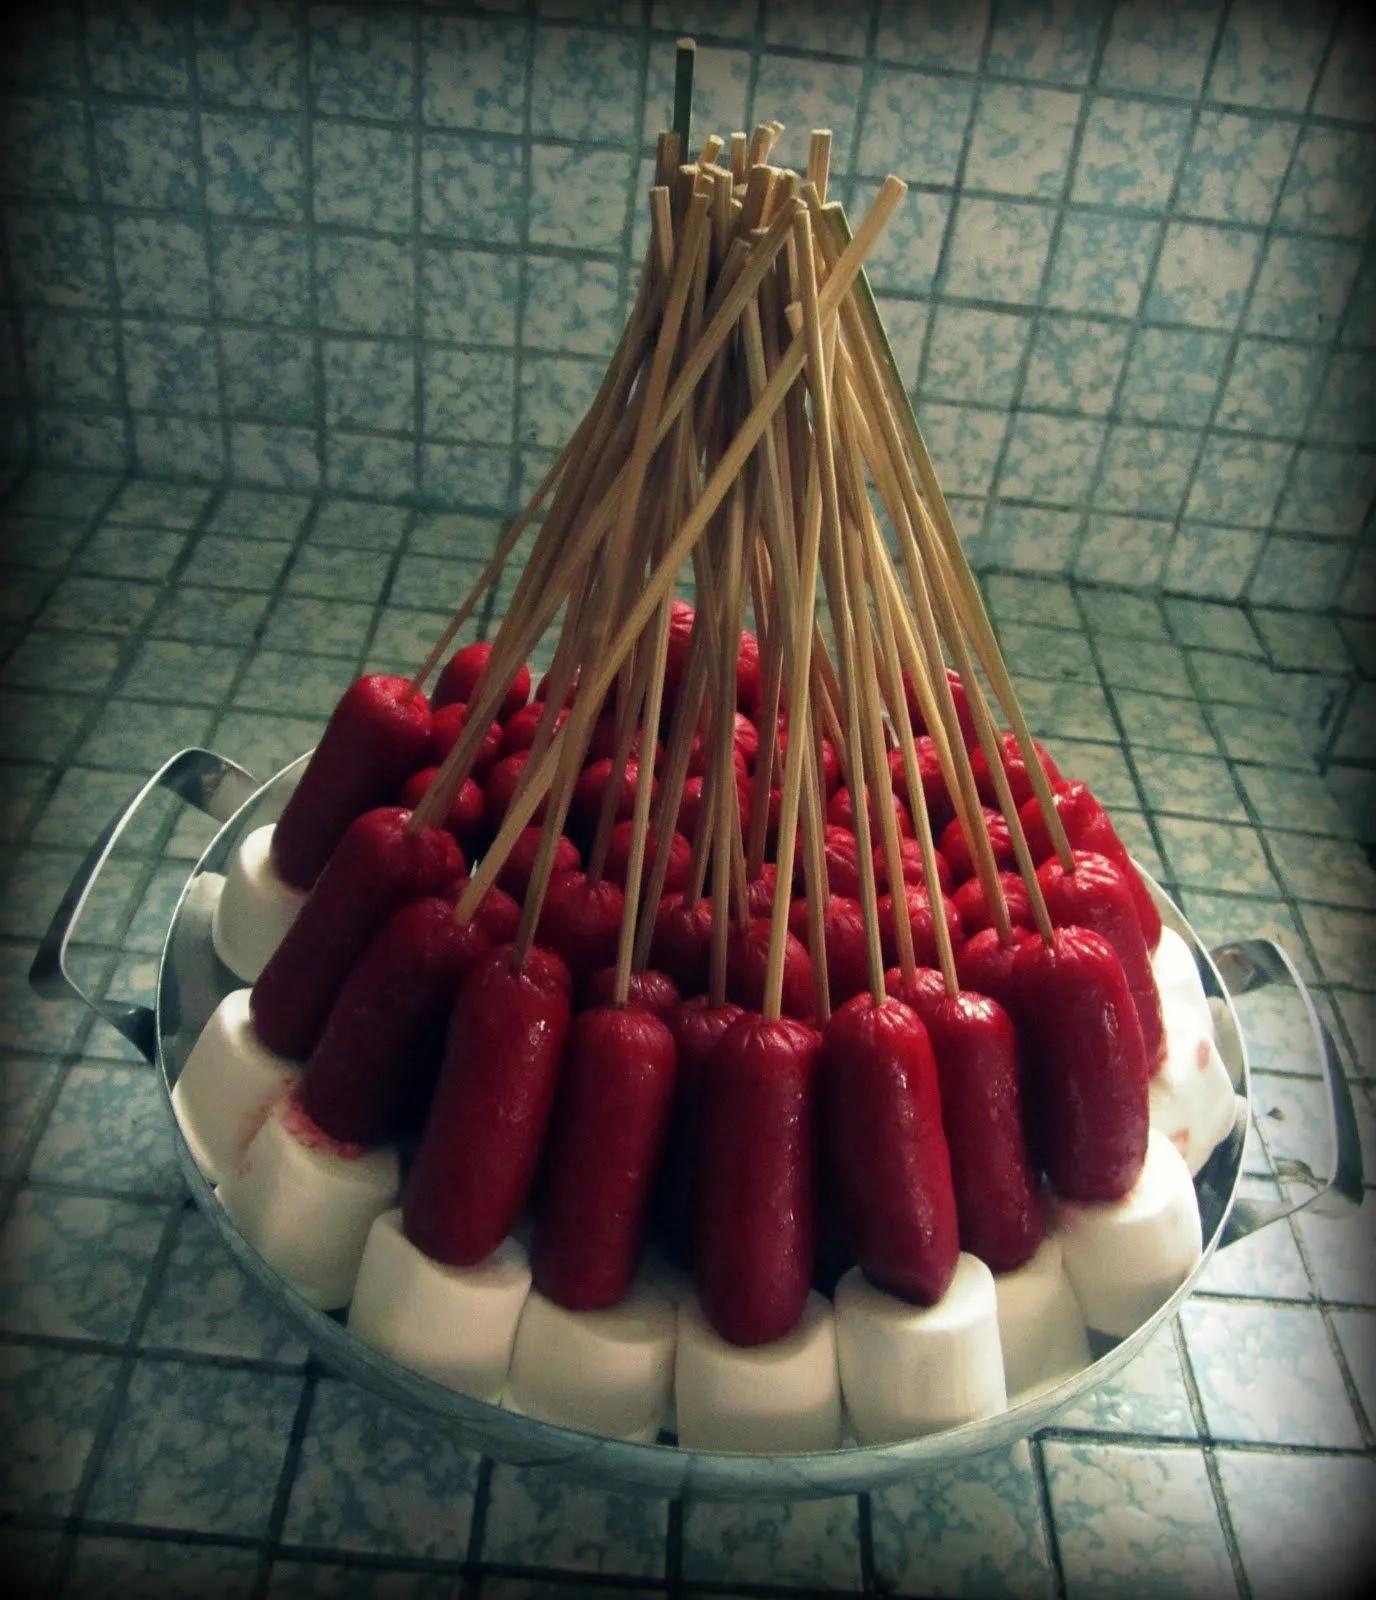 hotdogs and marshmallows | Pig roast, Birthday planning, Hot dogs